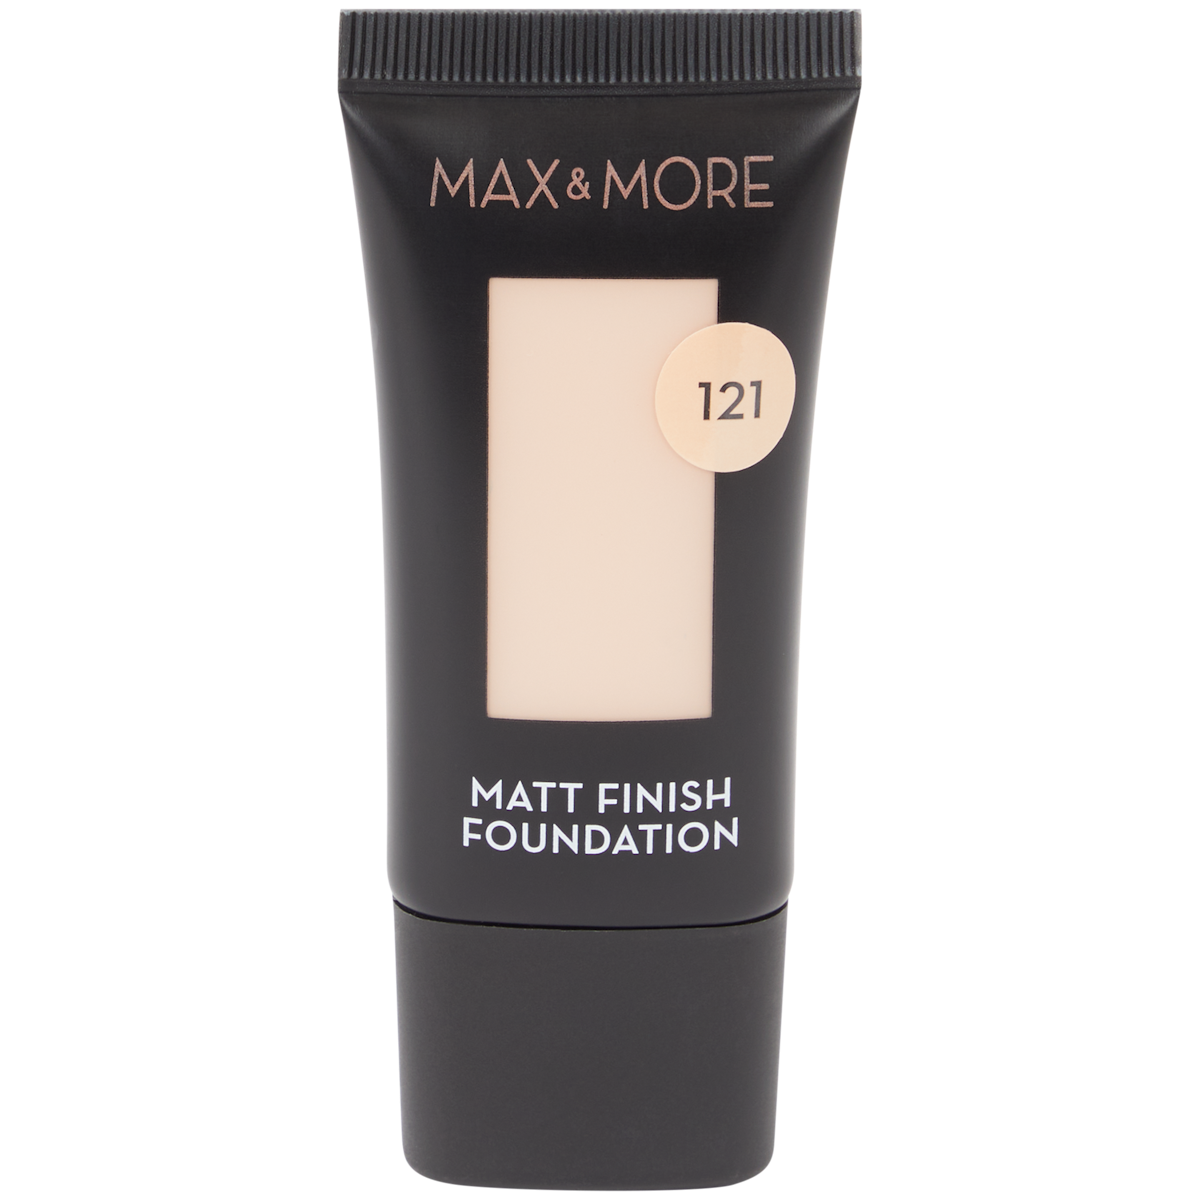 Max & More matt finish foundation